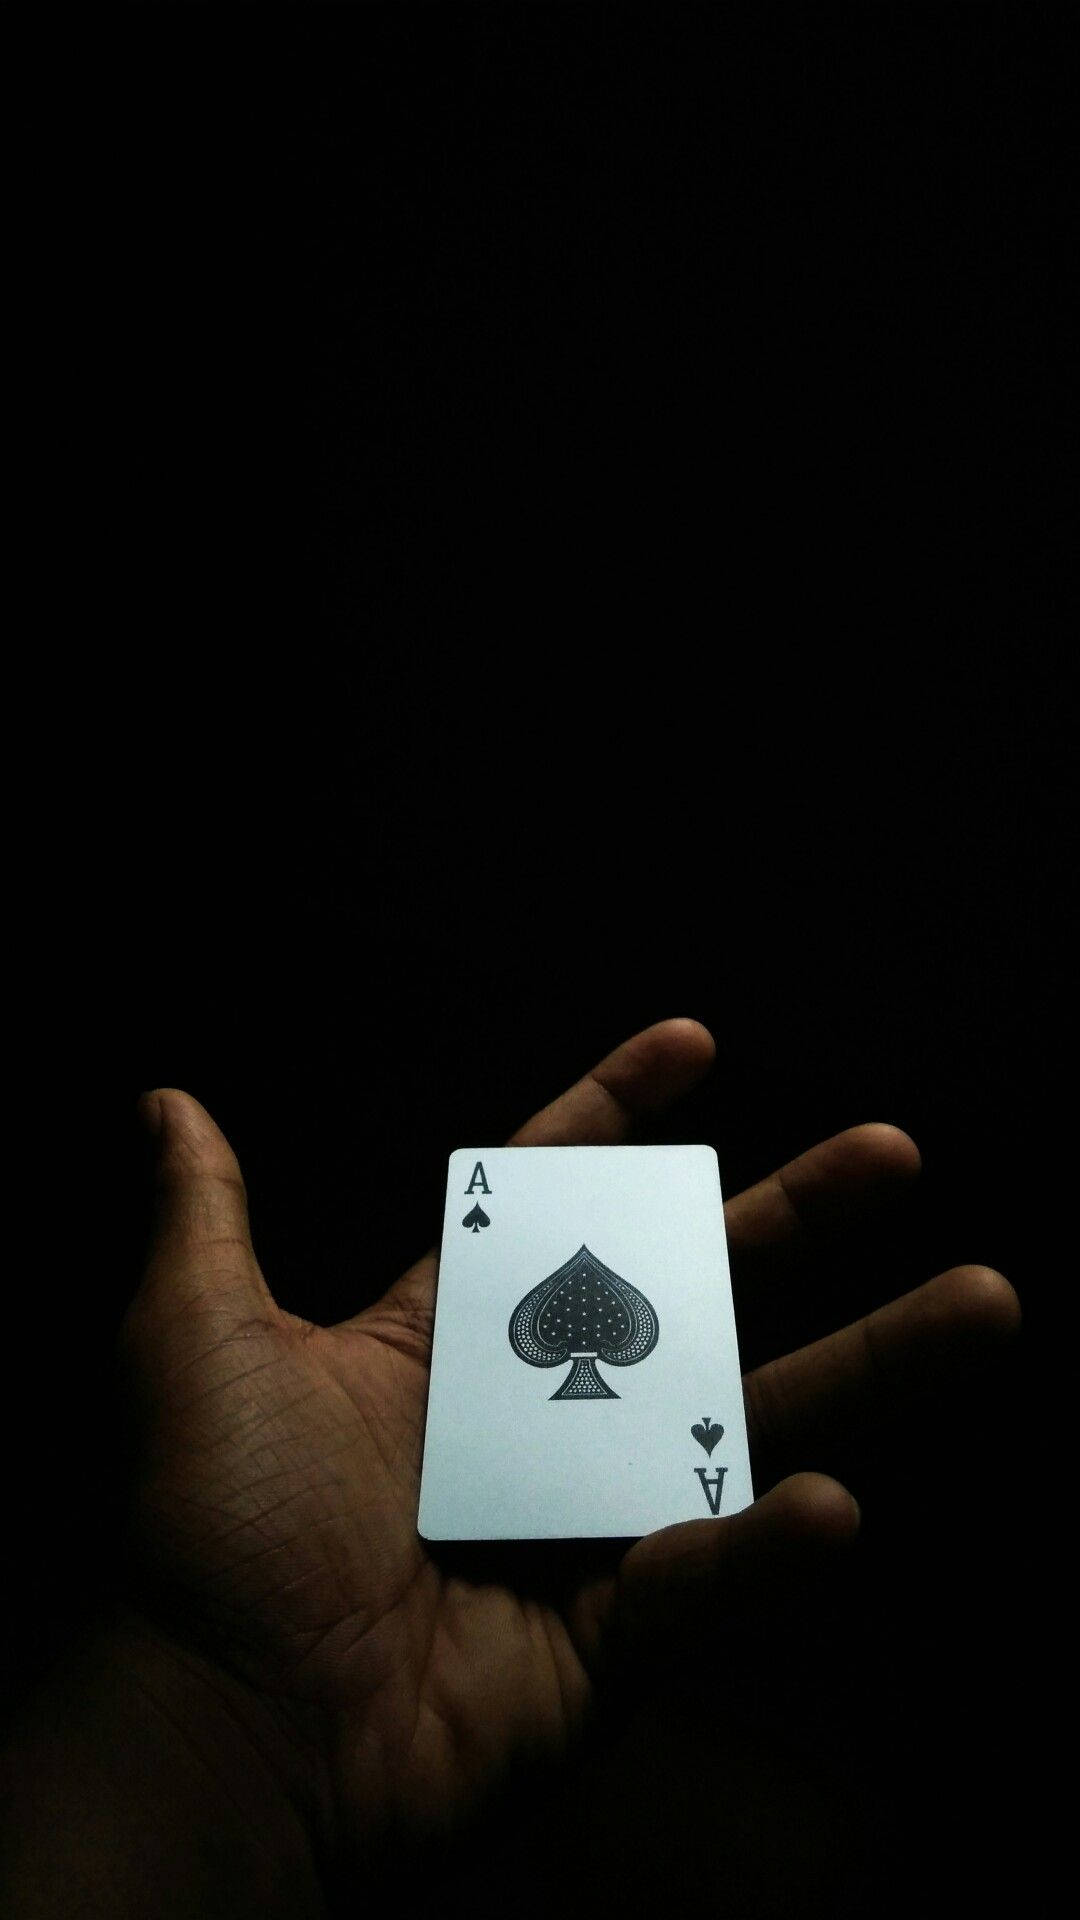 Ace Card On Hand Dark Mobile Wallpaper